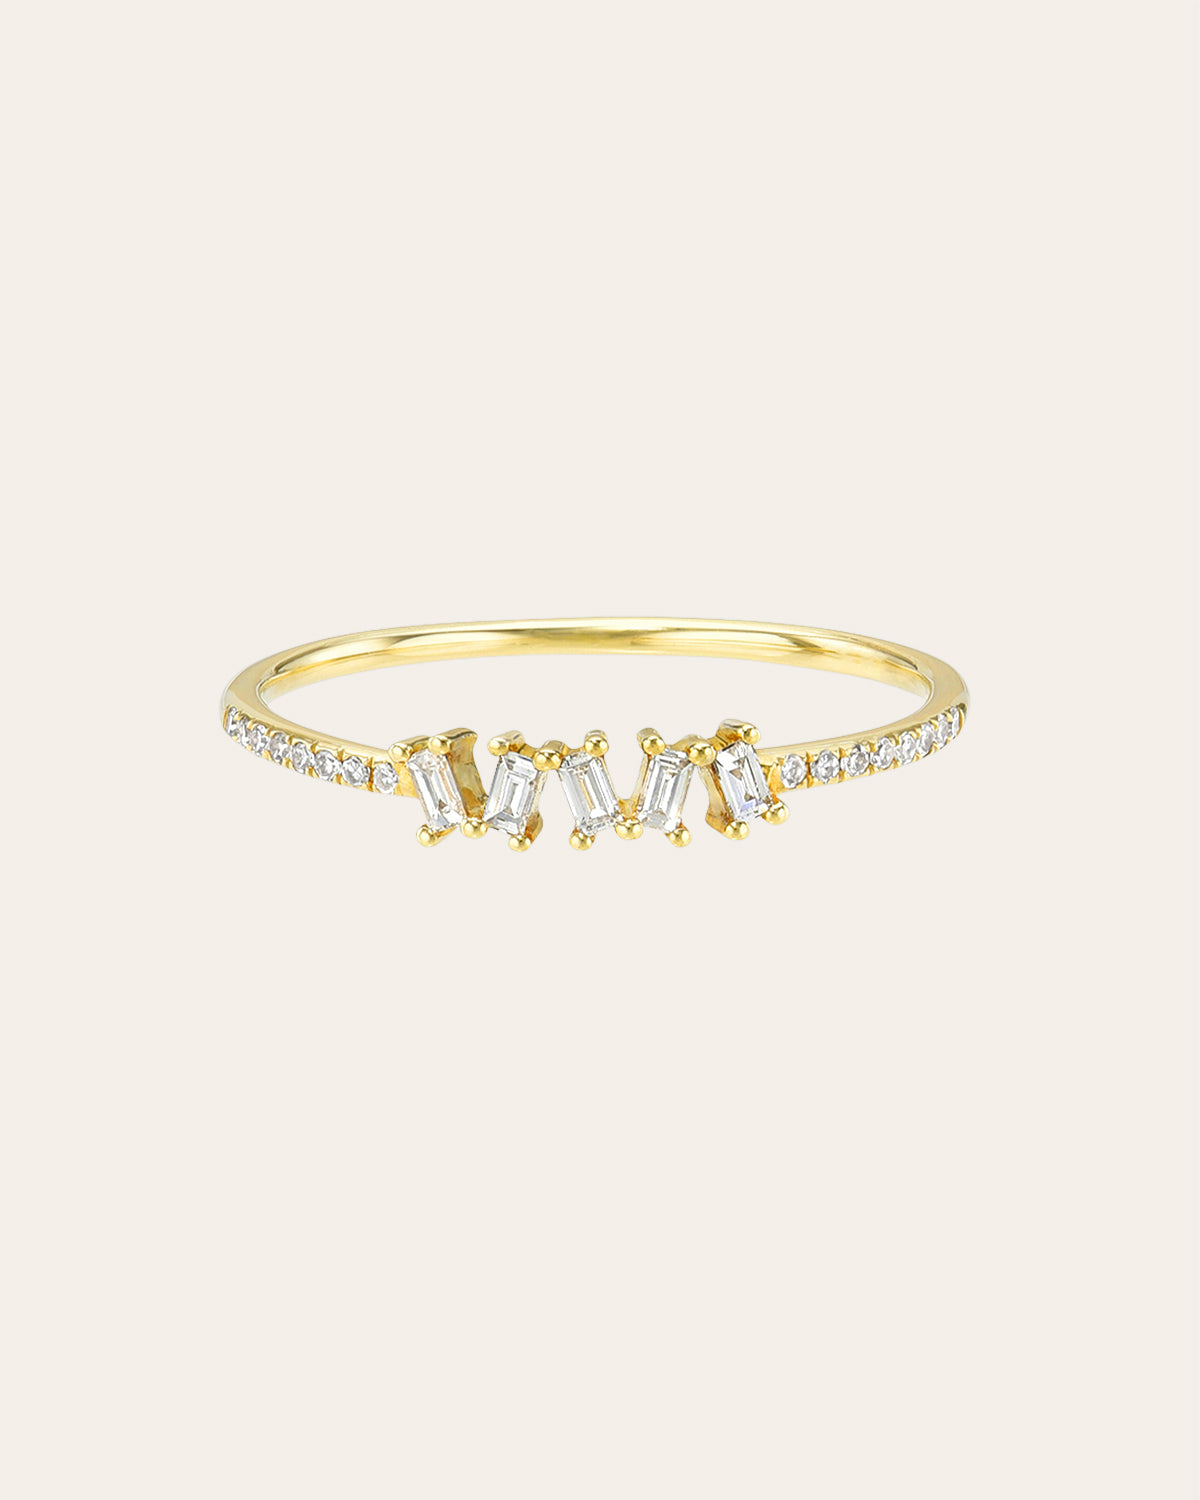 Buy Yellow Gold Rings for Women by Ferragamo Online | Ajio.com